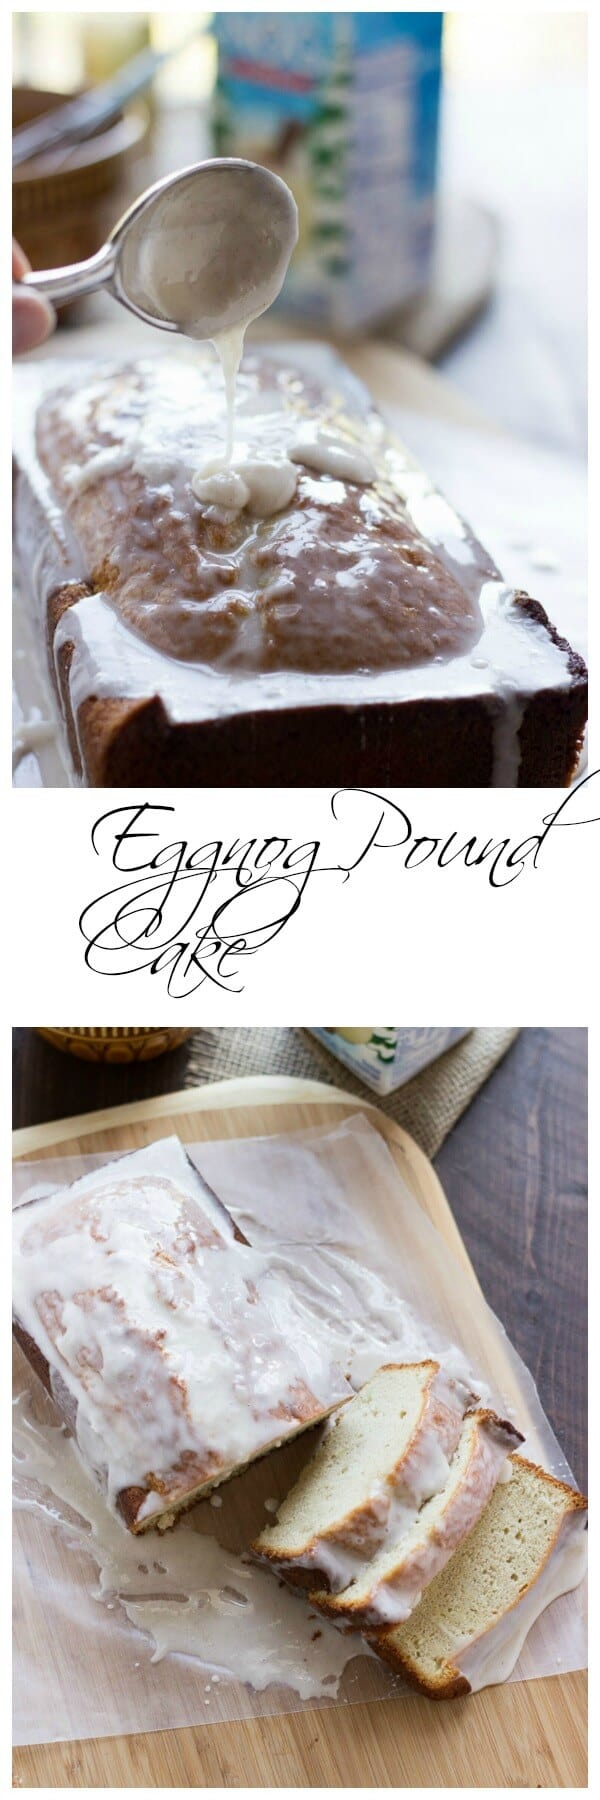 Eggnog pound cake with icing